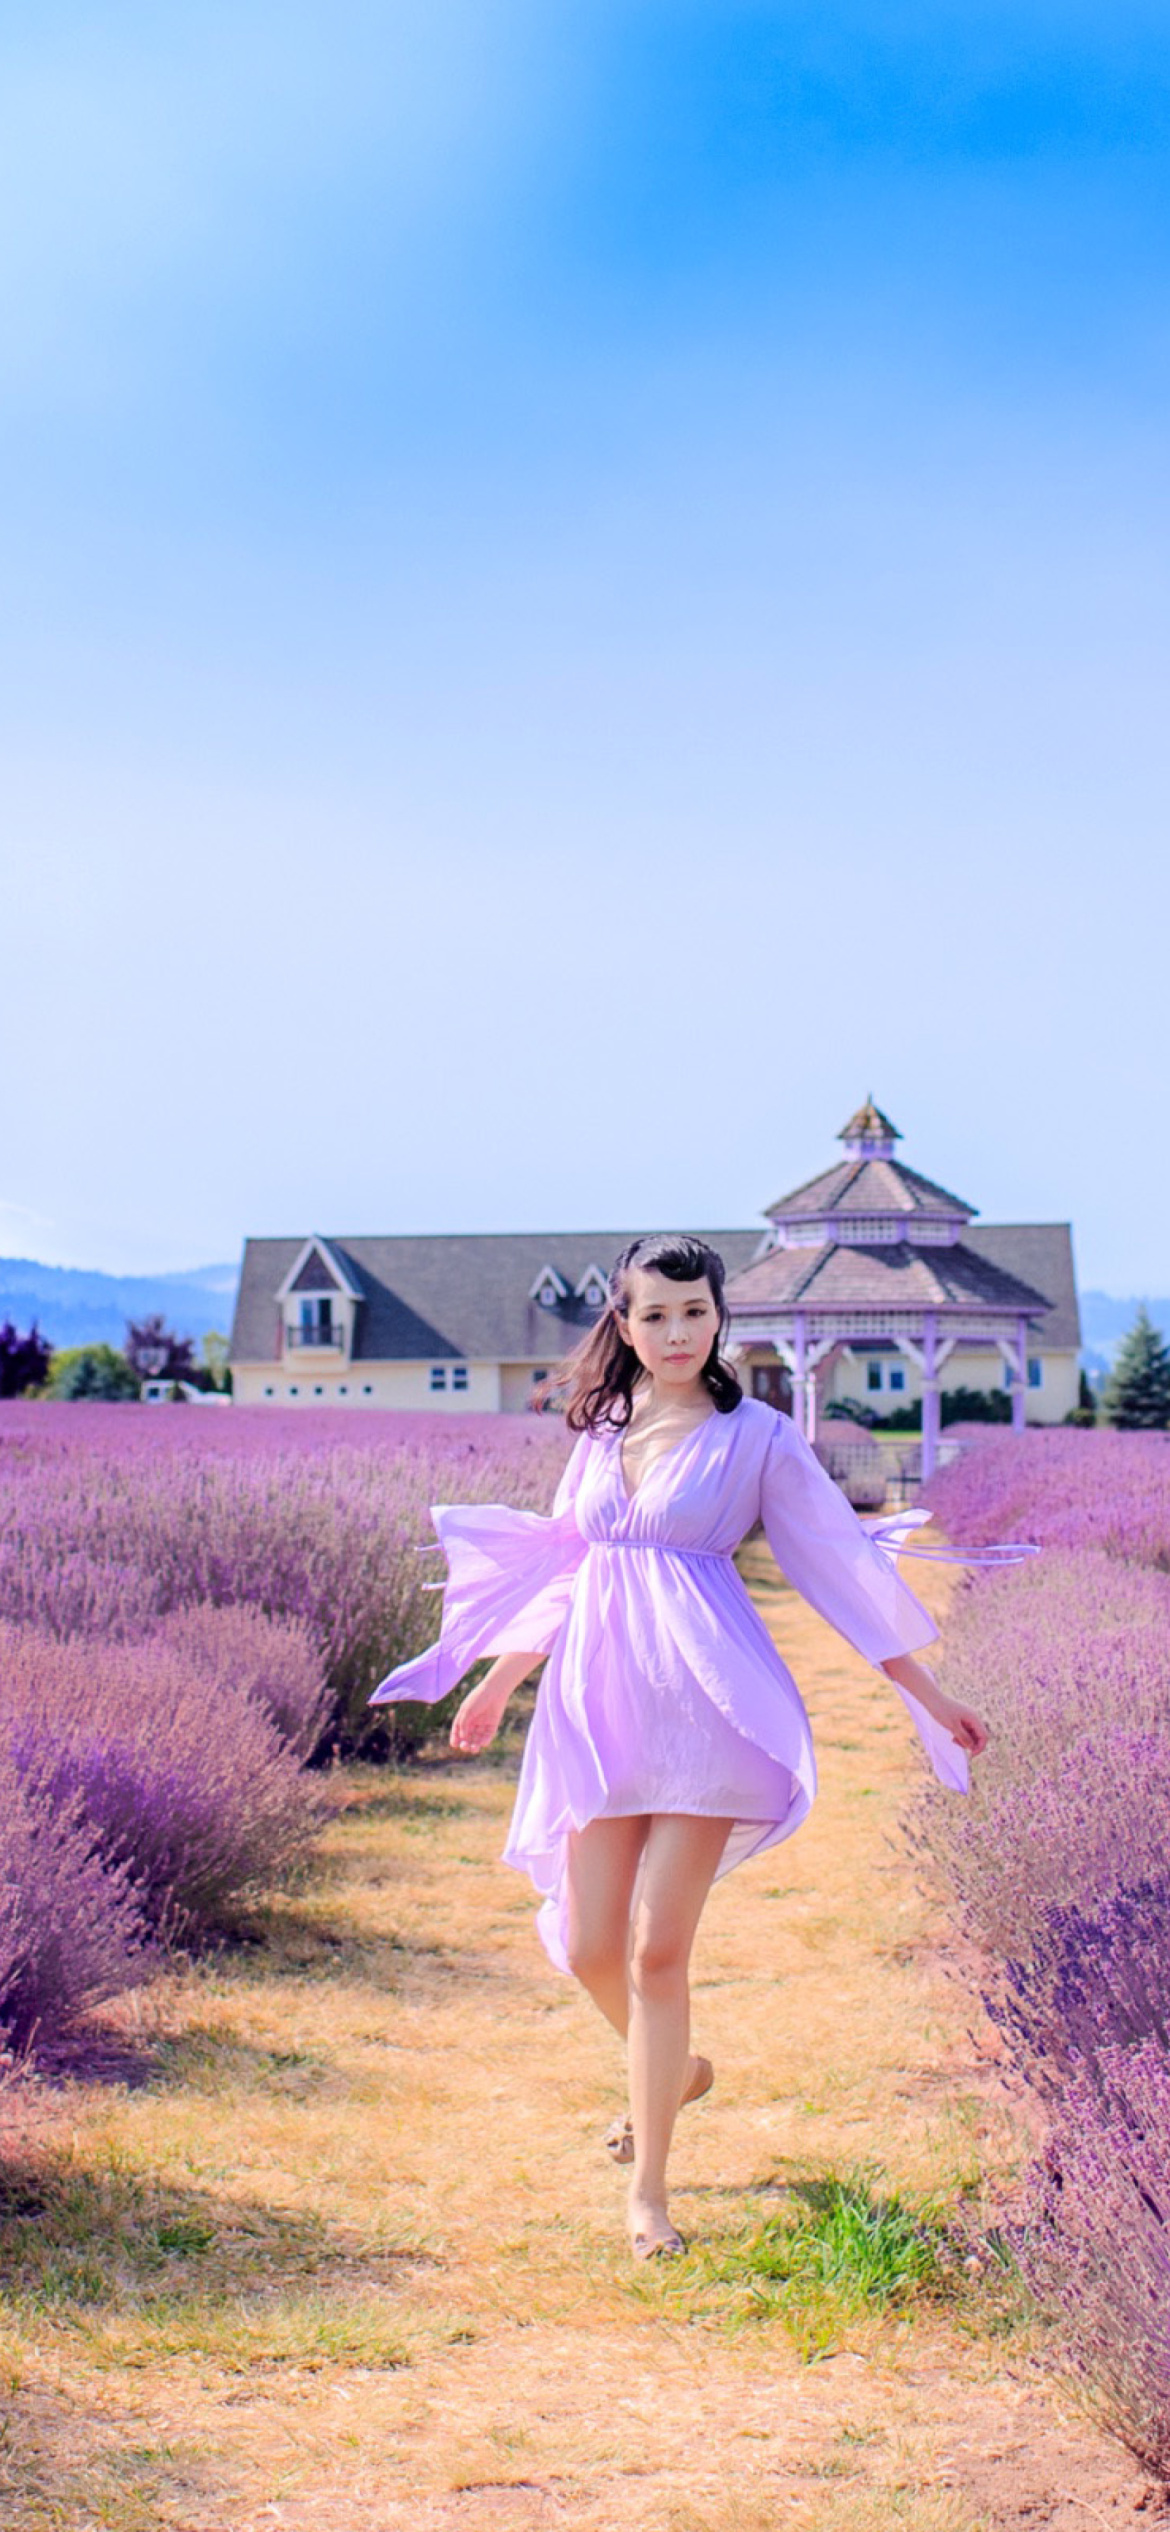 Summertime on Lavender field wallpaper 1170x2532